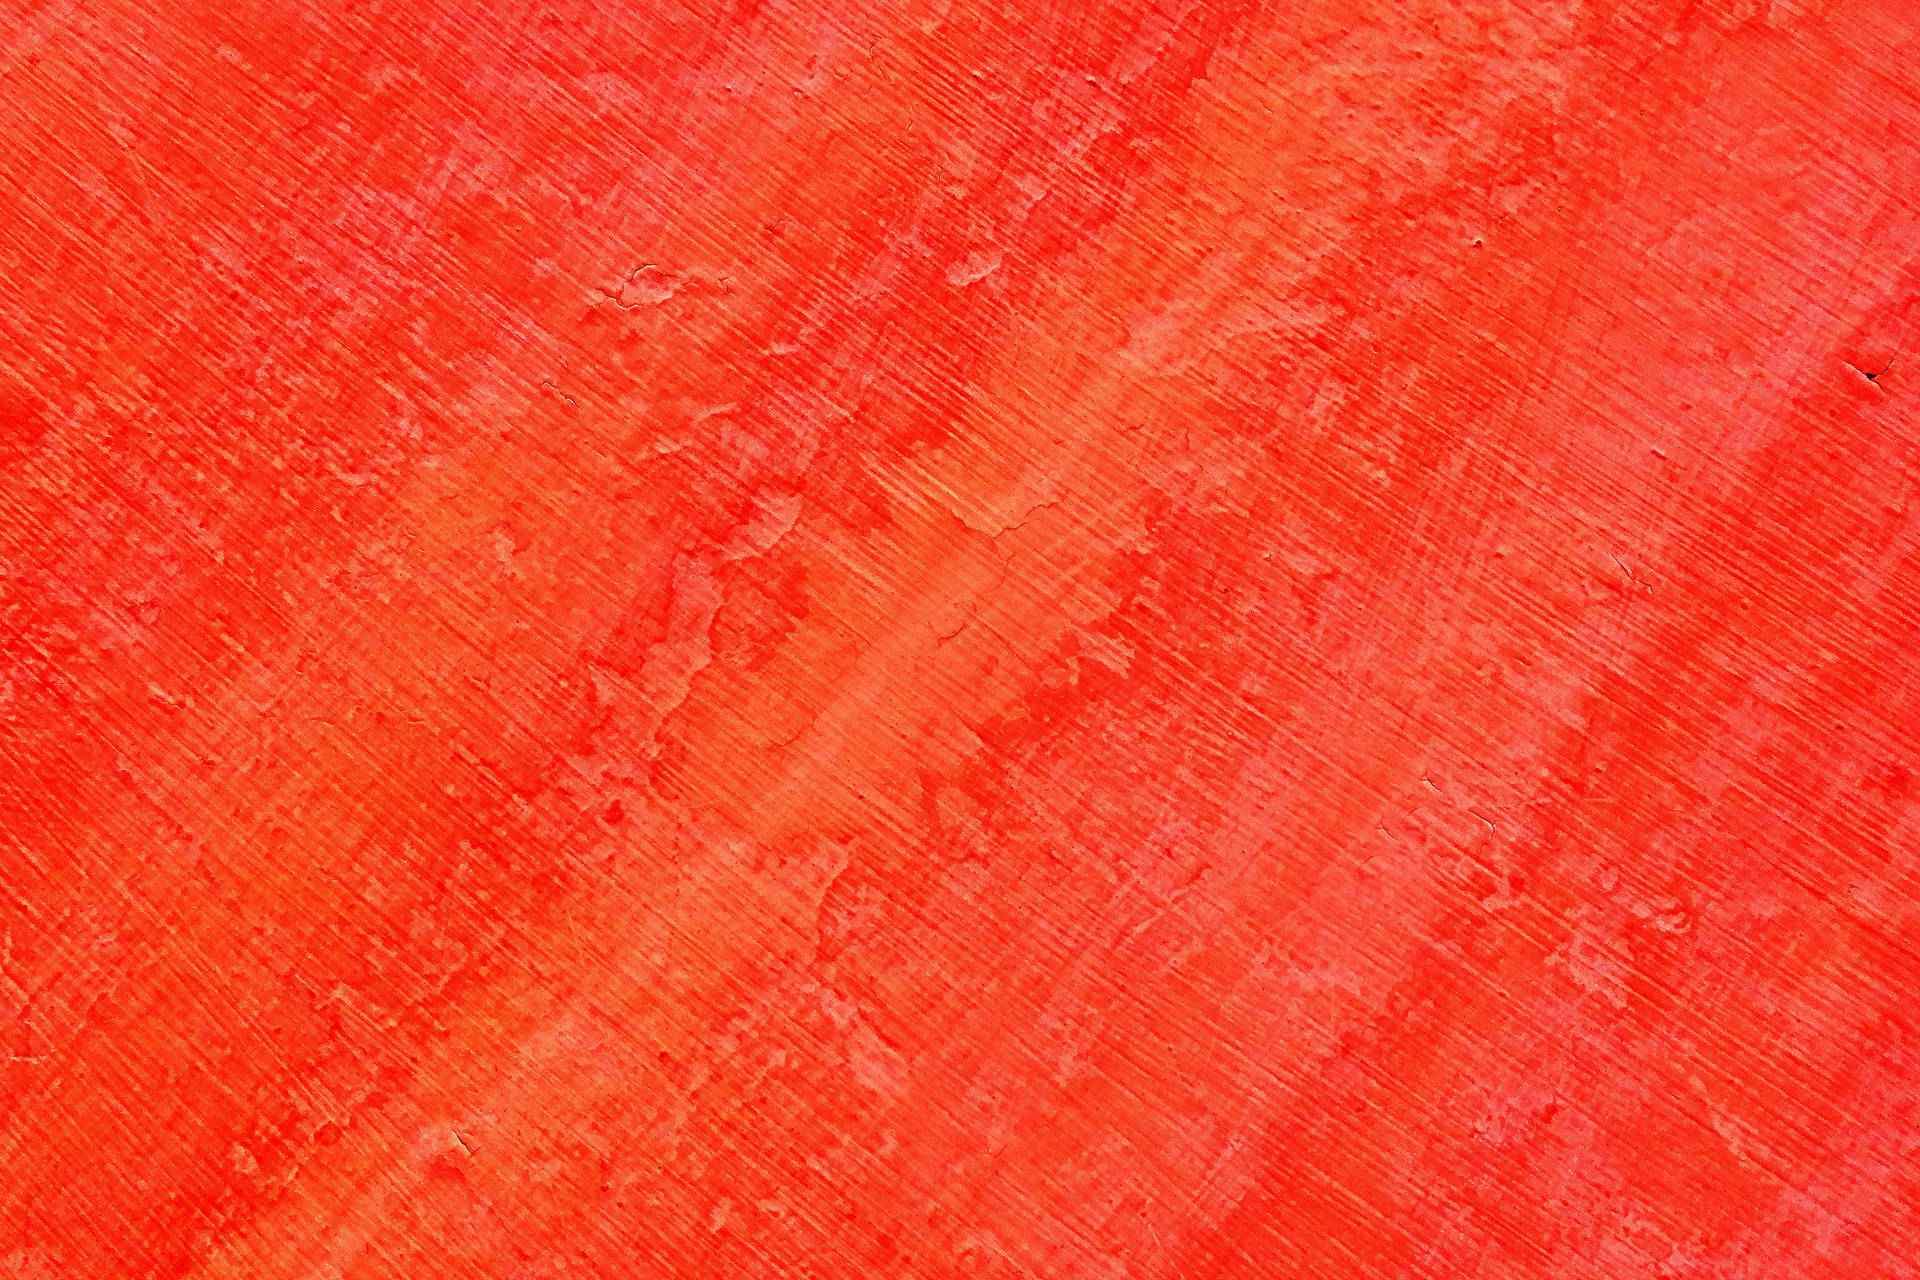 Textured Orange Wall